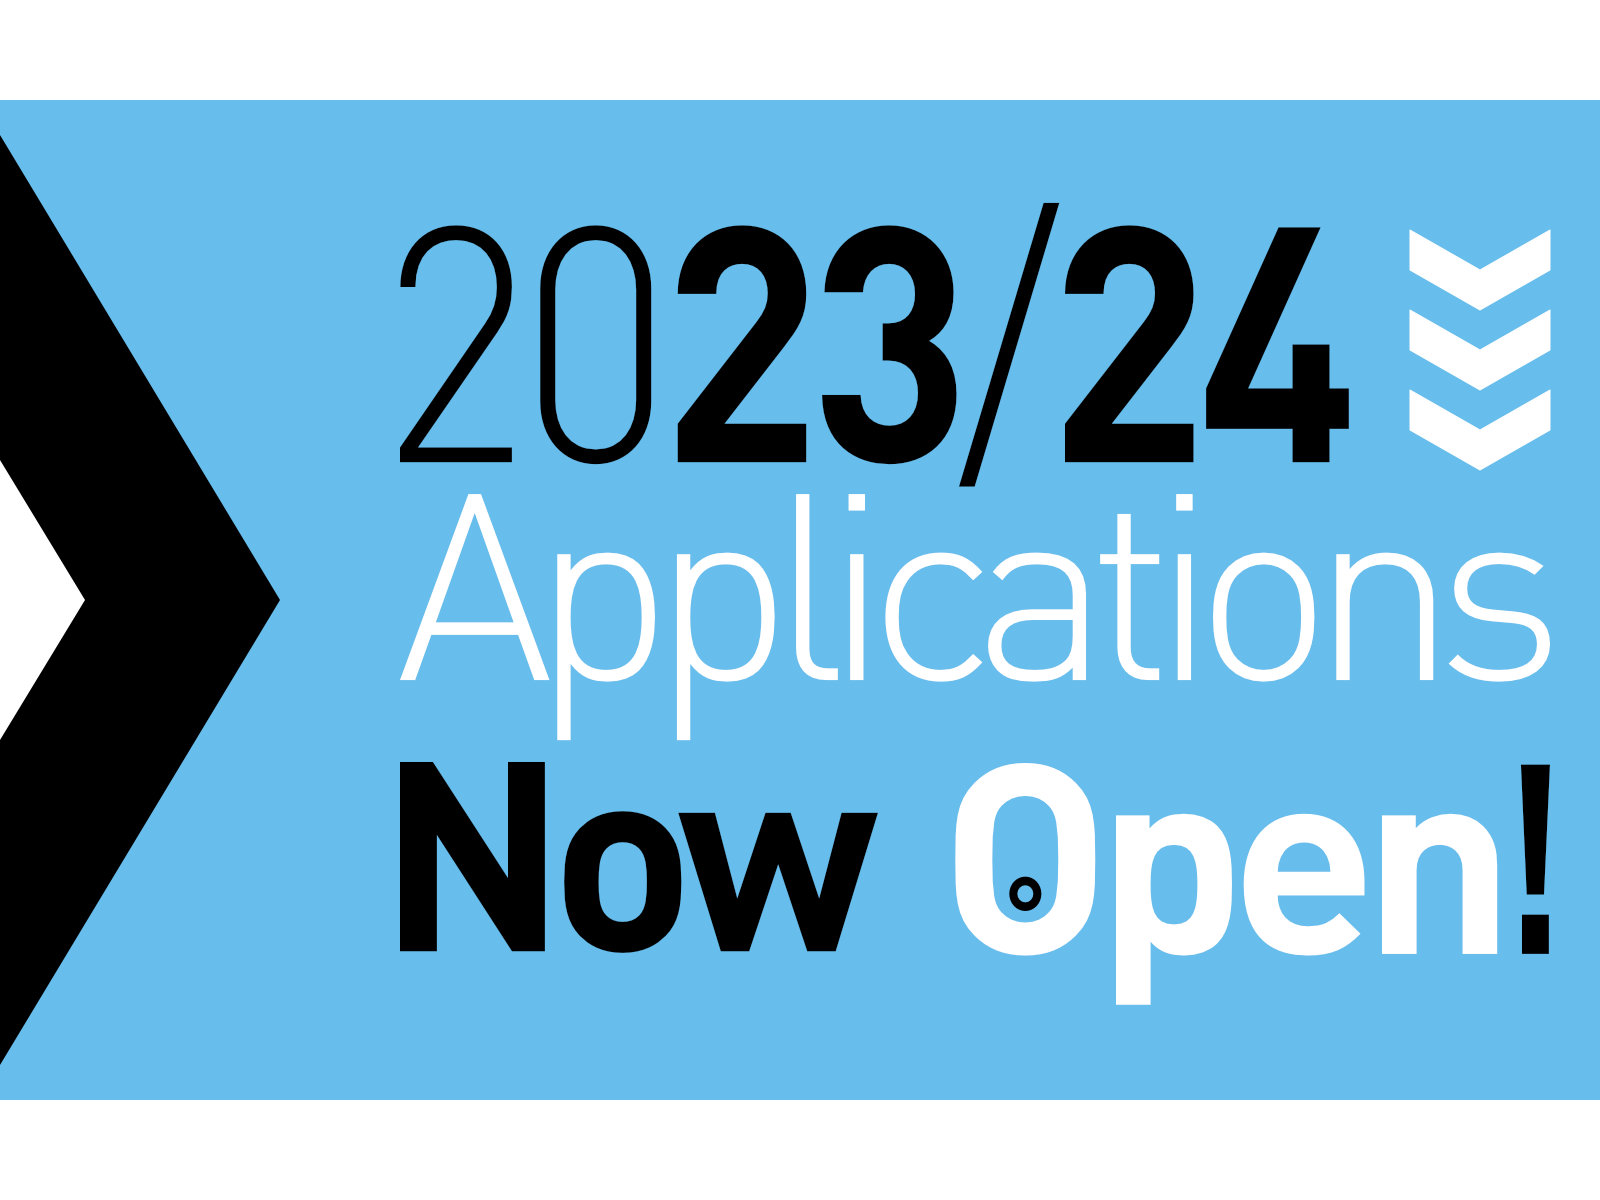 Online applications 2023/24 now open